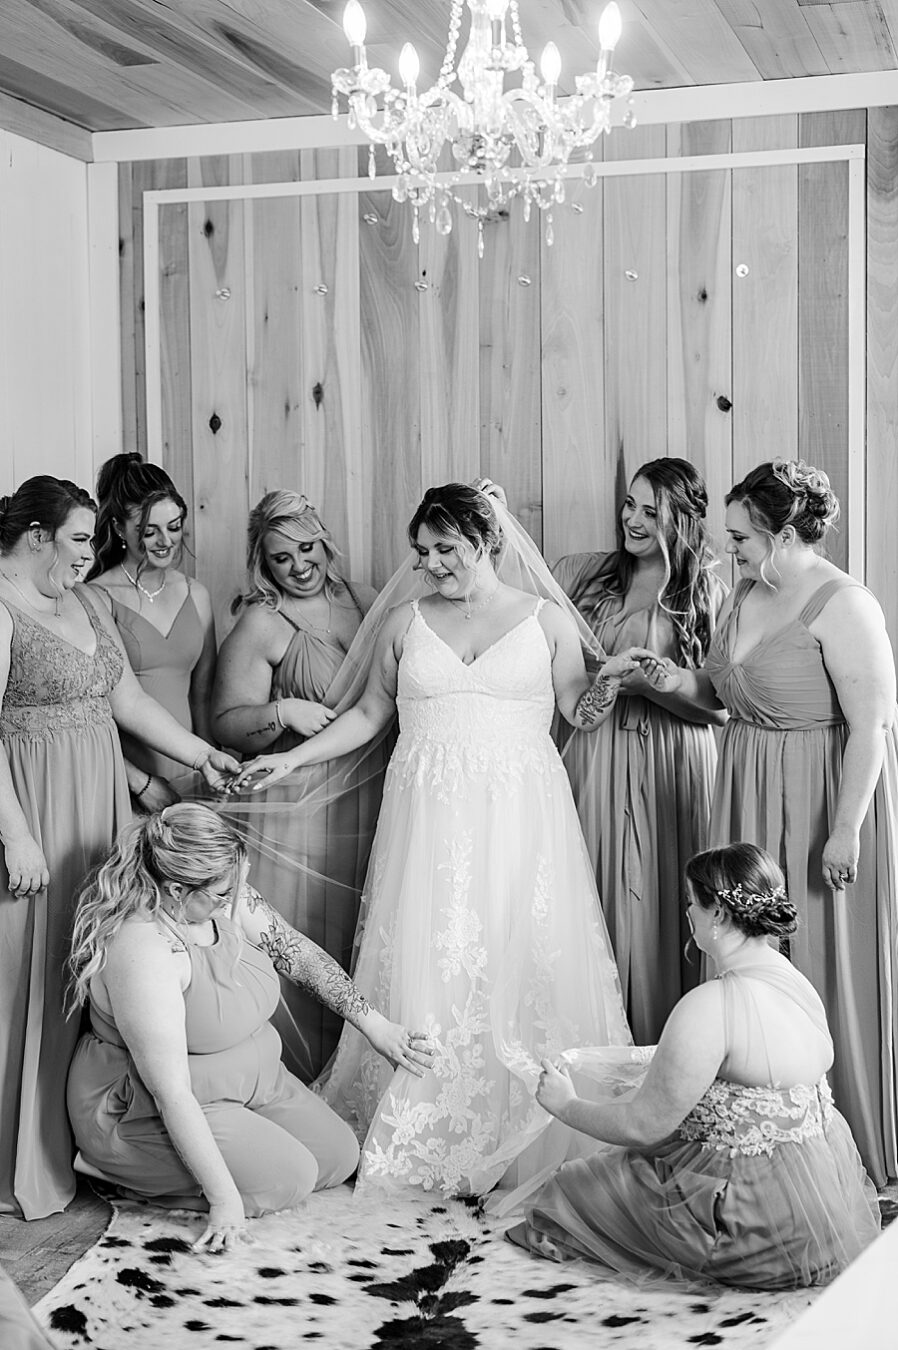 Bridesmaids help bride get ready at Allenbrooke Farm wedding by Amanda May Photos